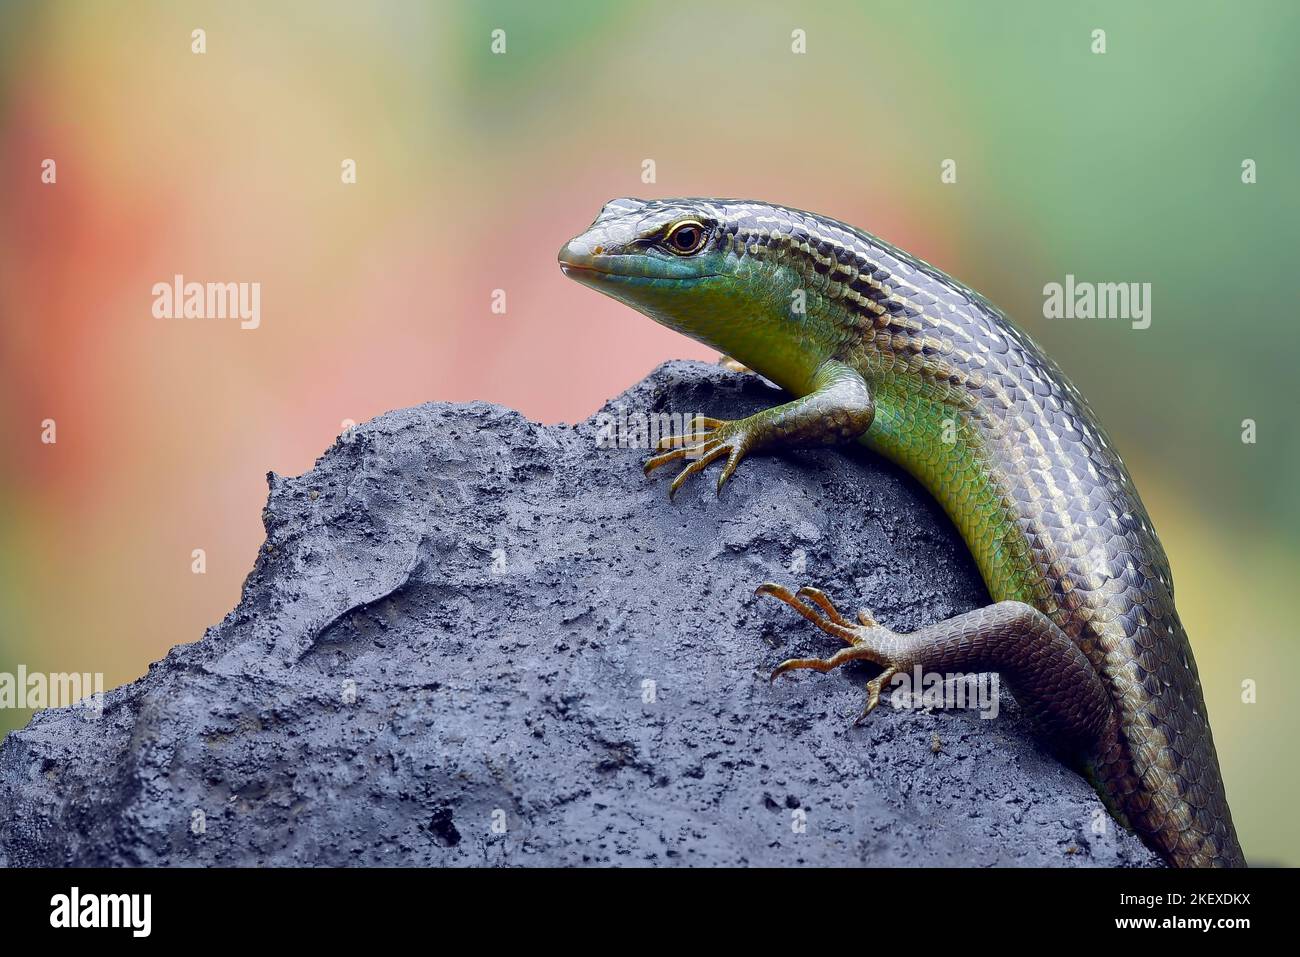 Green skink lizard on a tree branch Stock Photo